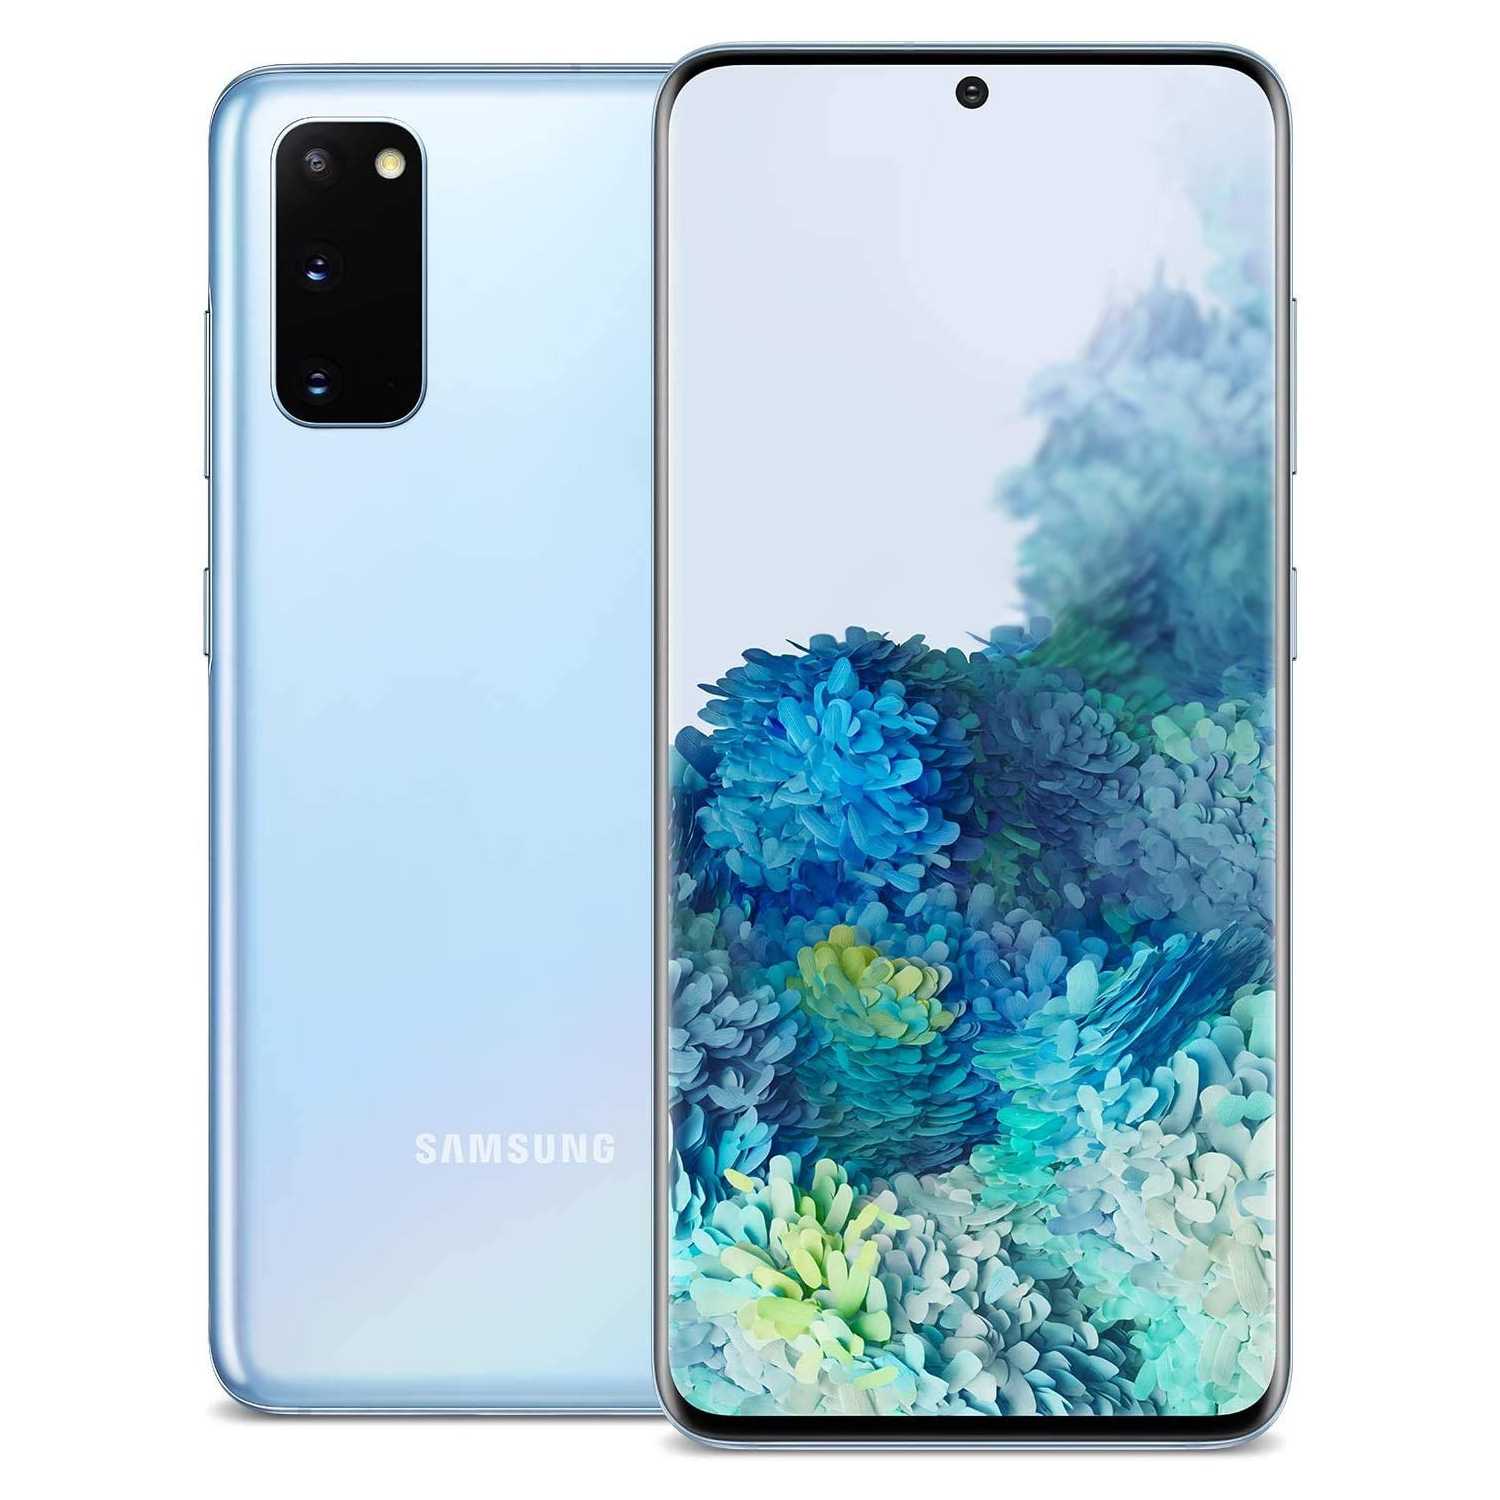 Samsung Galaxy S20 5G 128GB (SM-G981U1) - Factory Unlocked Smartphone - Cloud Blue - Open Box